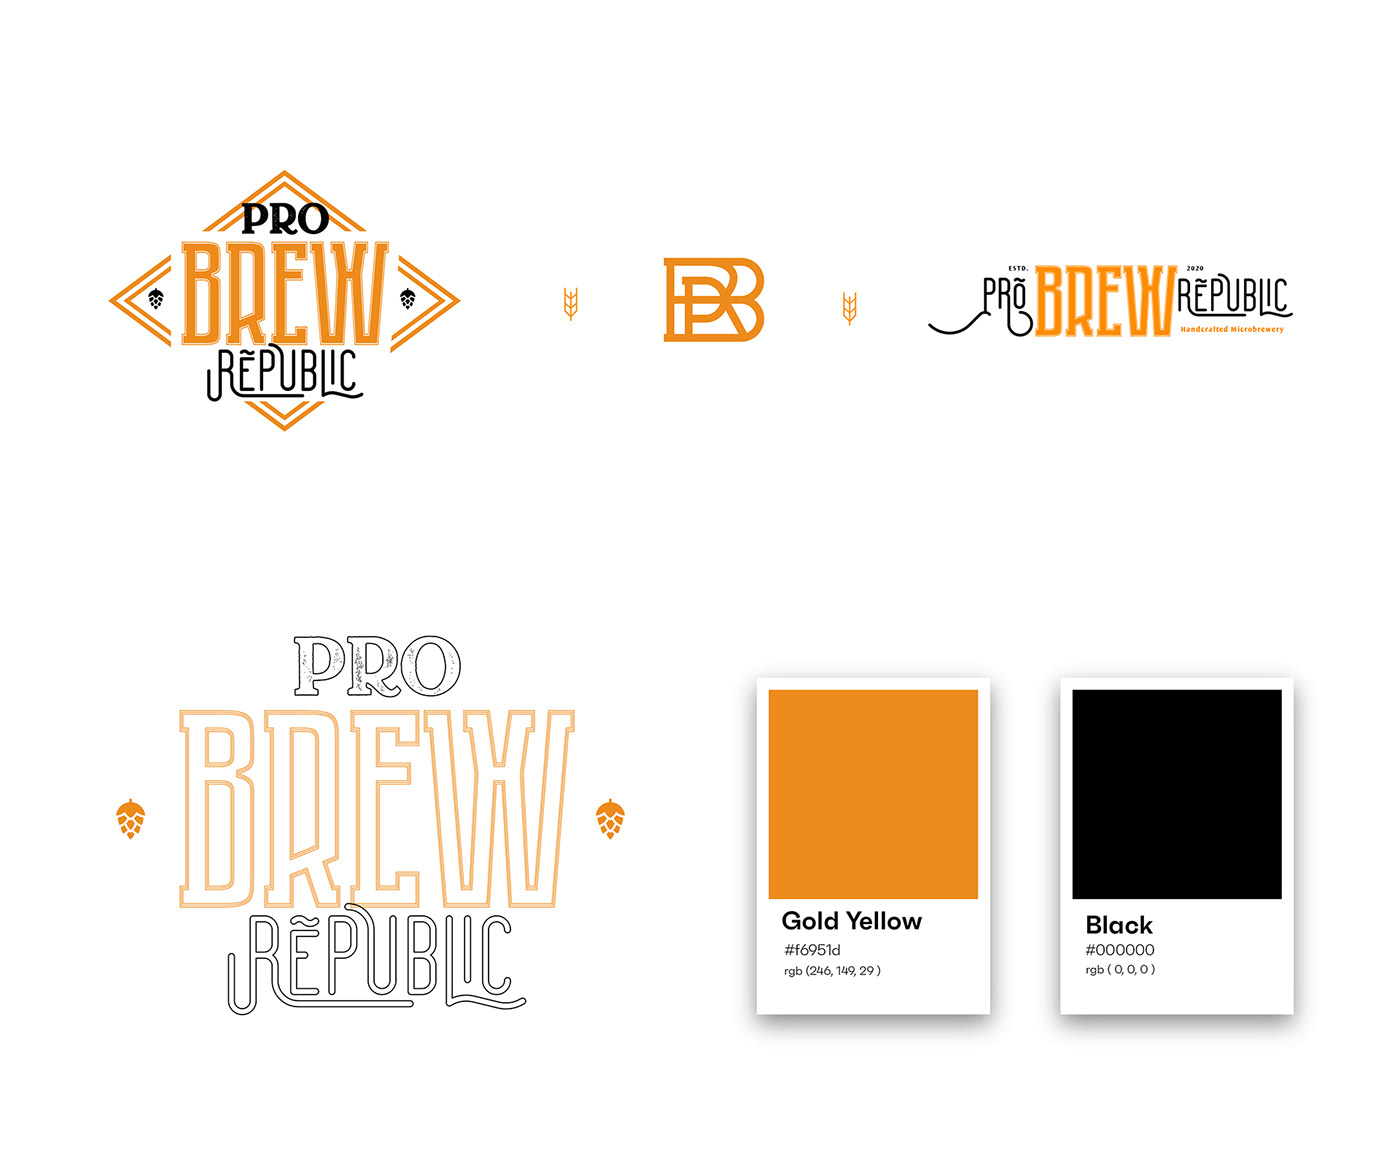 brand brand guidelines brand identity branding  Case Study logo Logotype probrewrepublic Rabbixel stationary